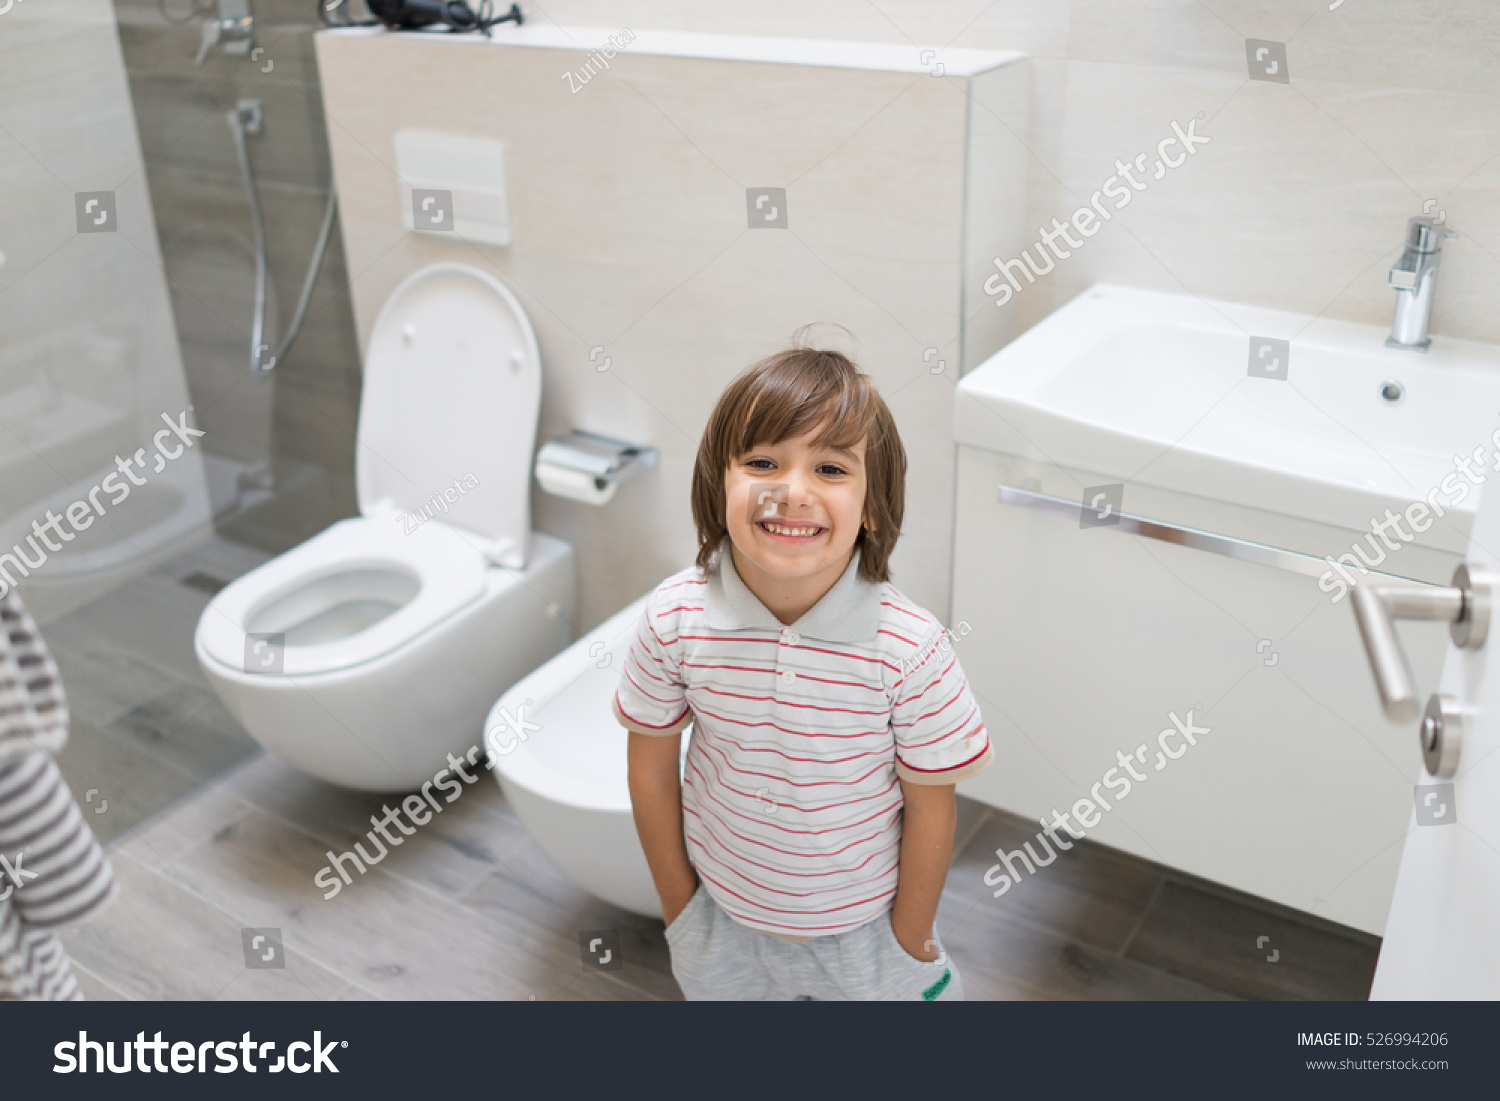 Kid in bathroom dell gx280 optiplex